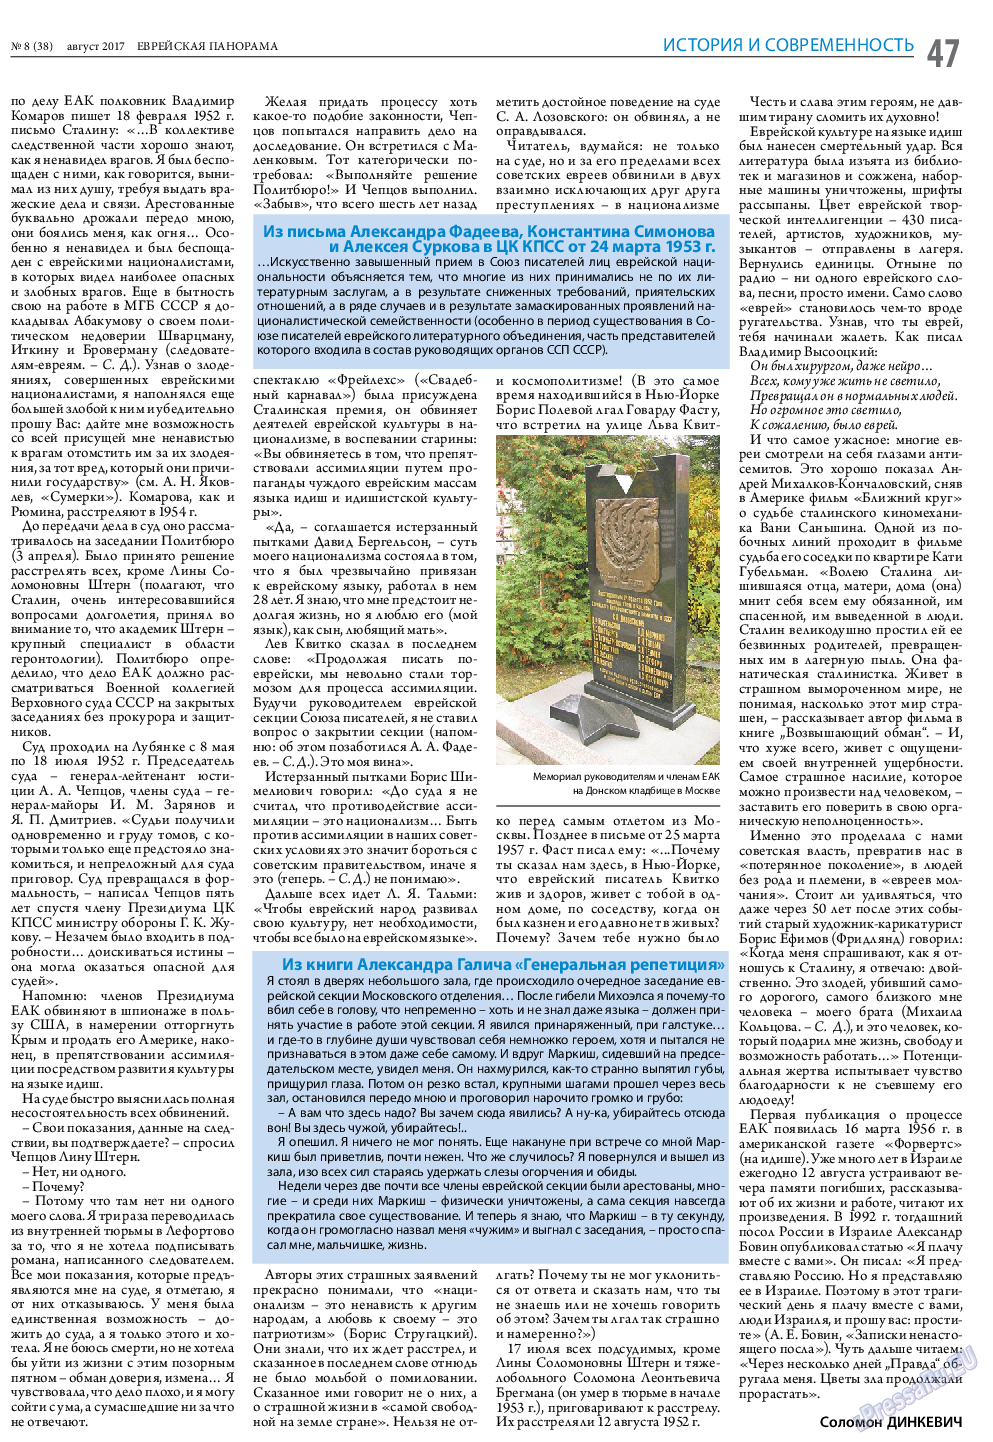 Еврейская панорама, газета. 2017 №8 стр.47